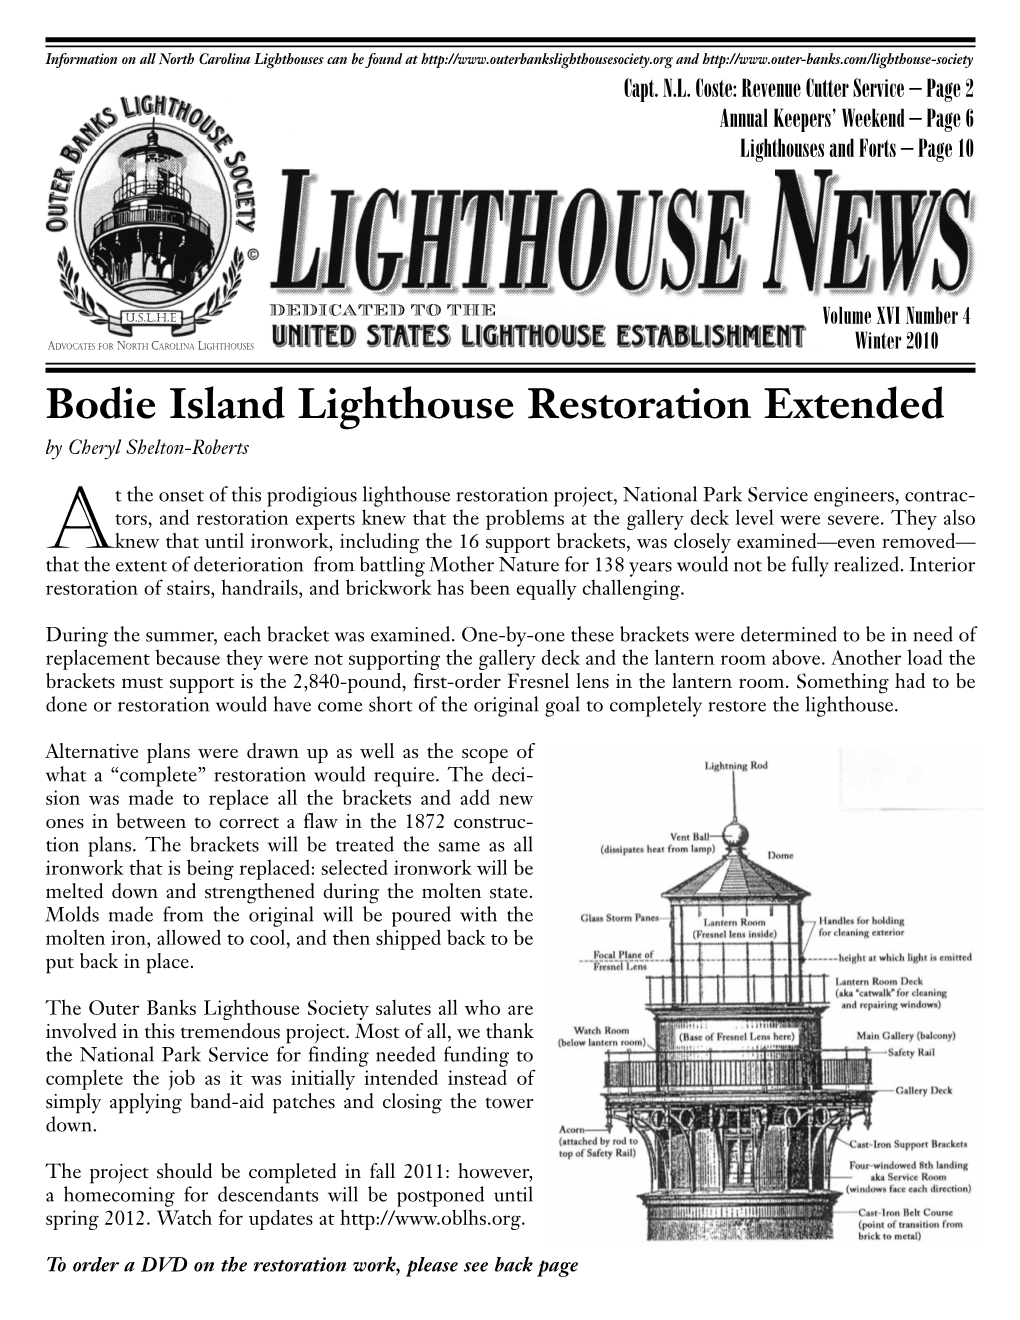 Bodie Island Lighthouse Restoration Extended by Cheryl Shelton-Roberts